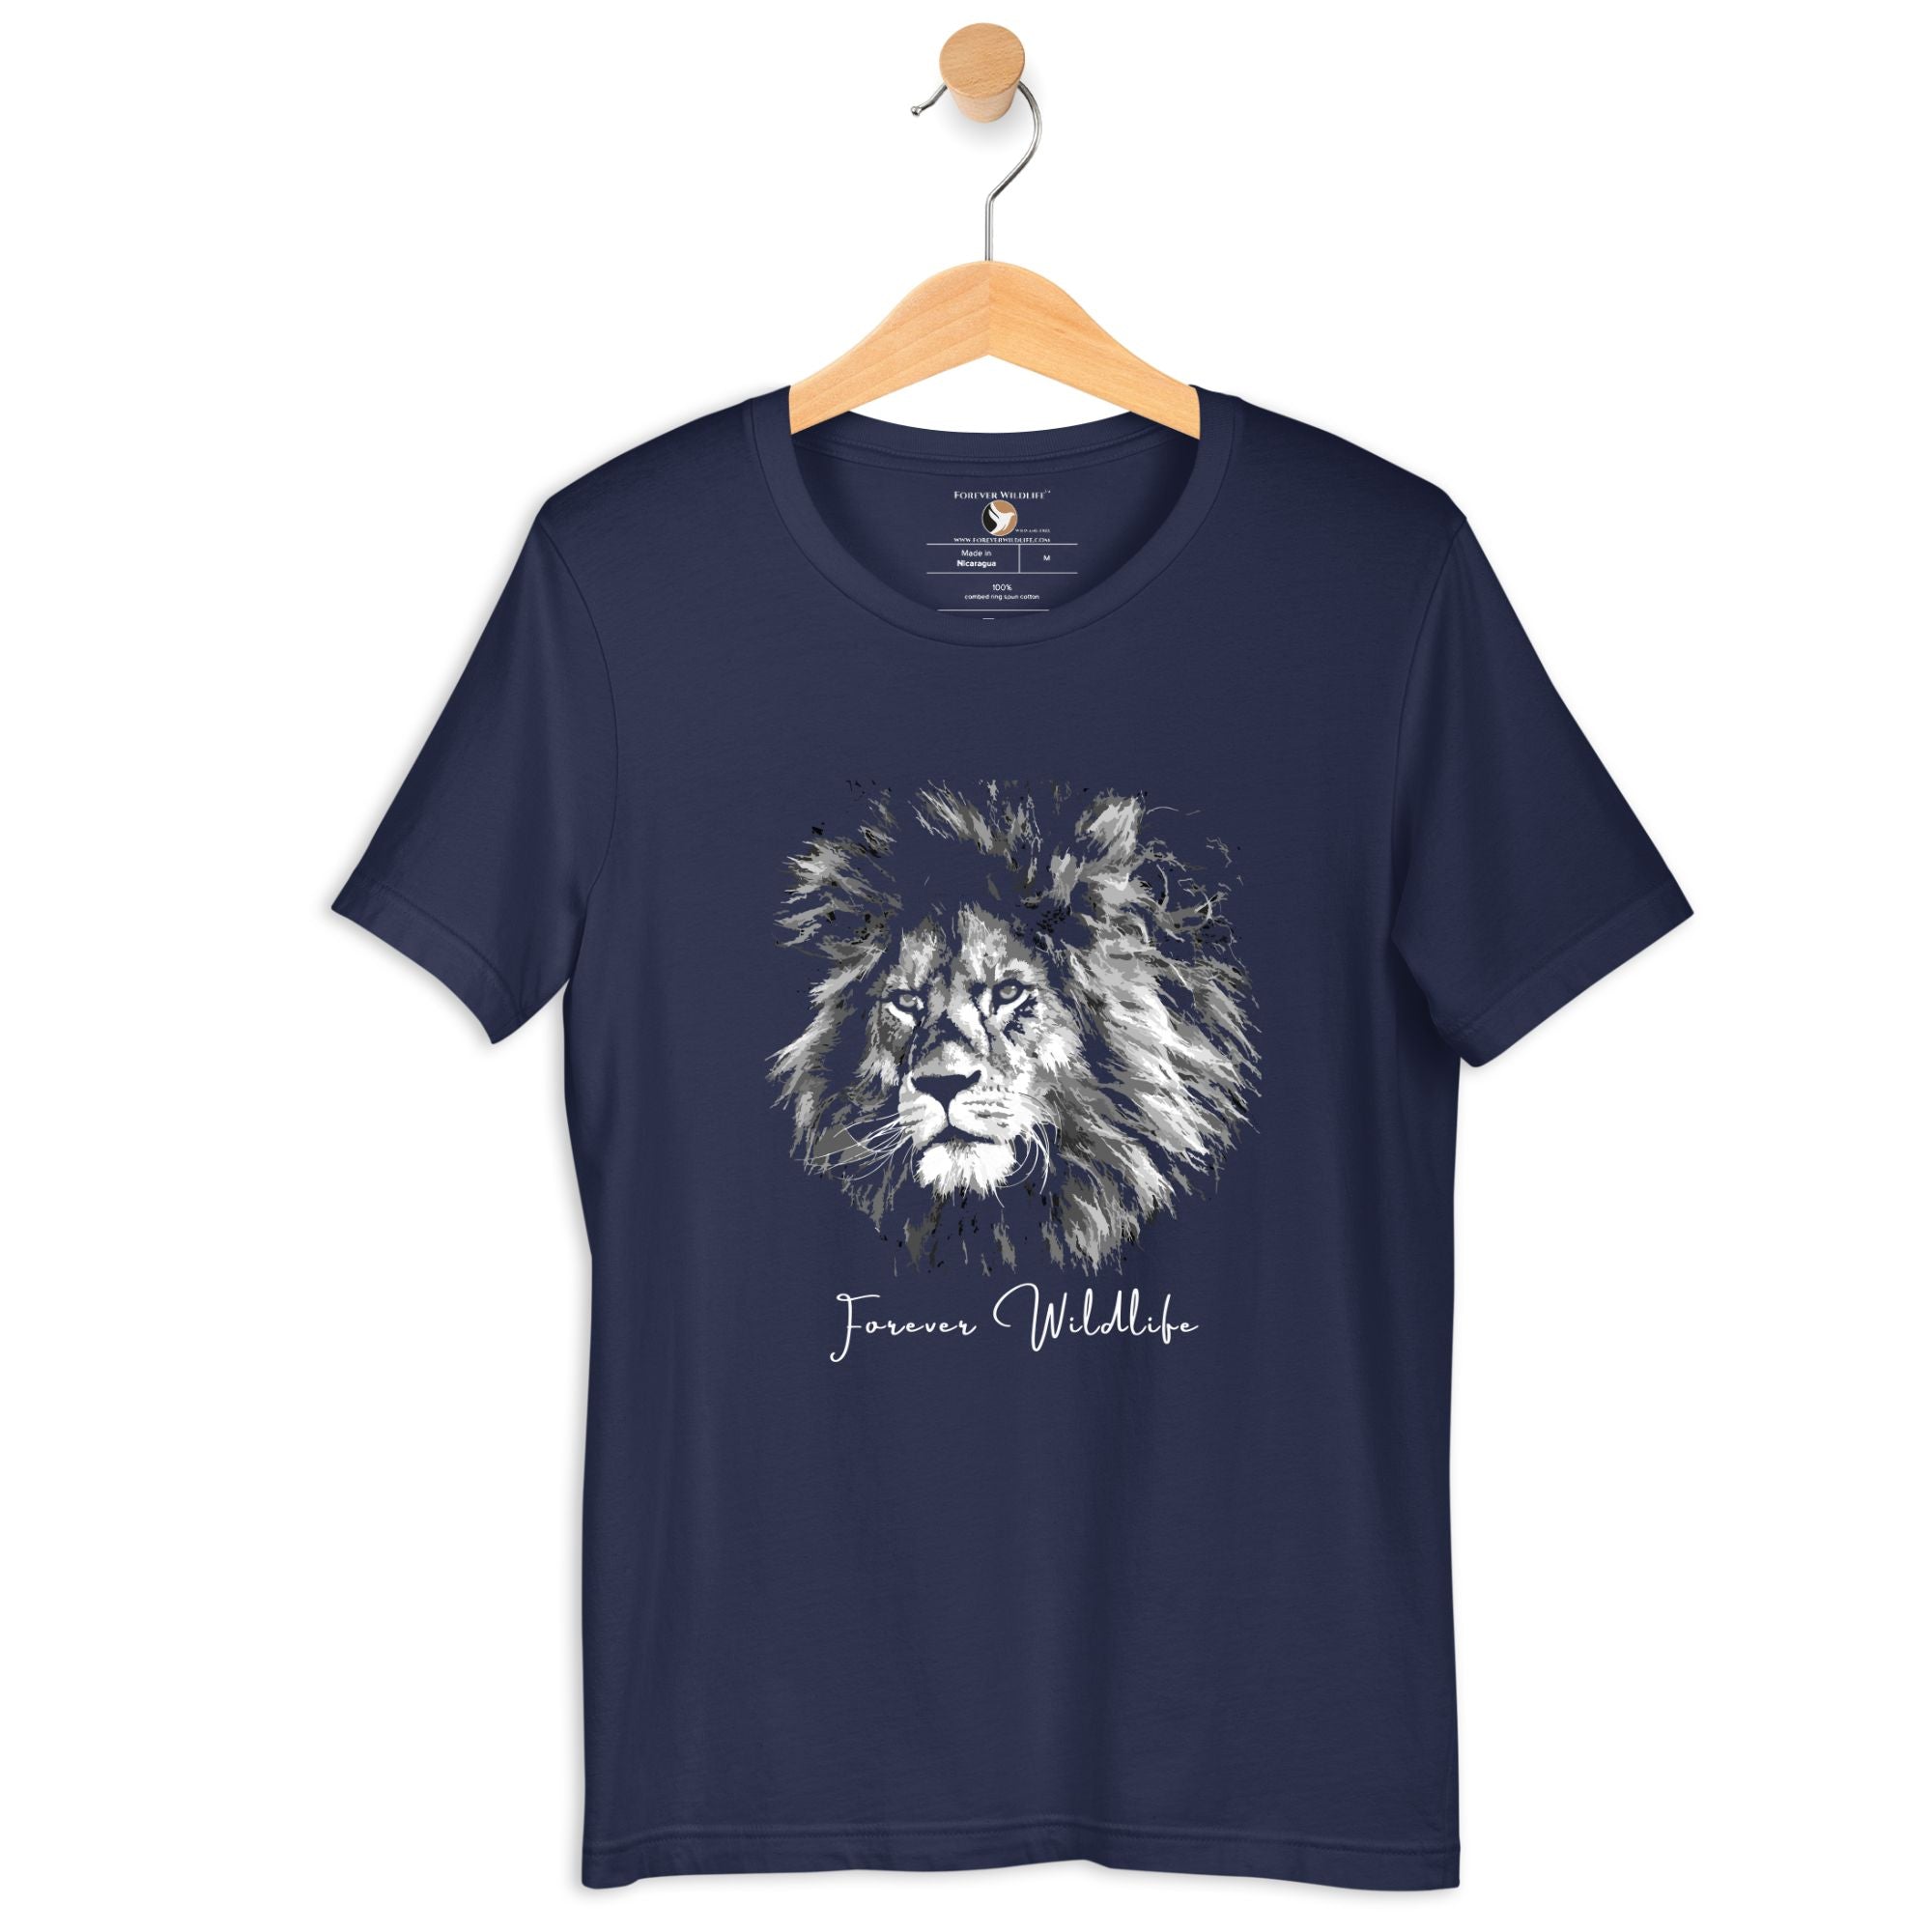 Lion T-Shirt in Navy – Premium Wildlife T-Shirt Design, Wildlife Clothing & Apparel from Forever Wildlife